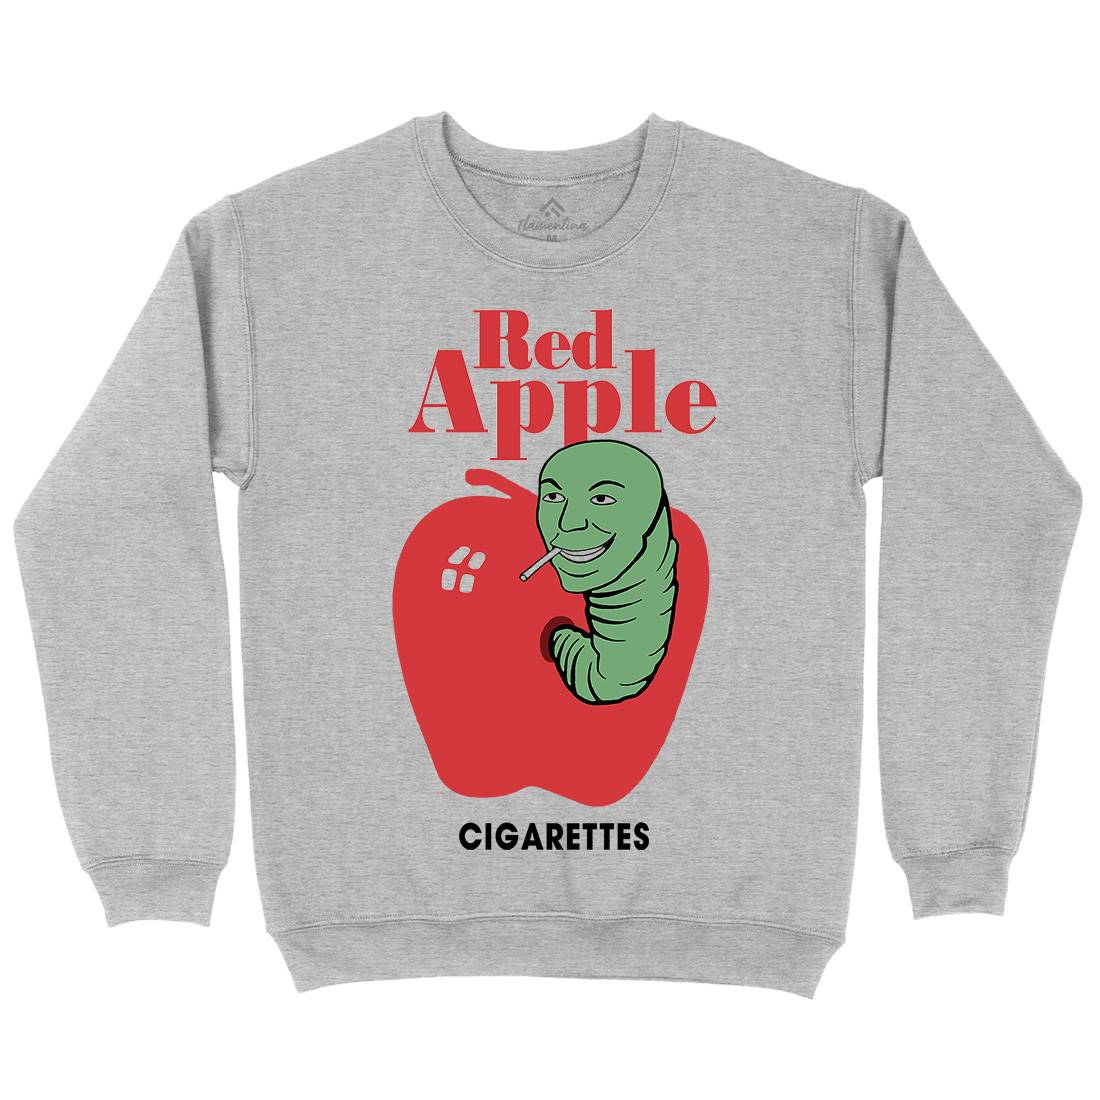 Red Apple Cigarettes Kids Crew Neck Sweatshirt Retro D211